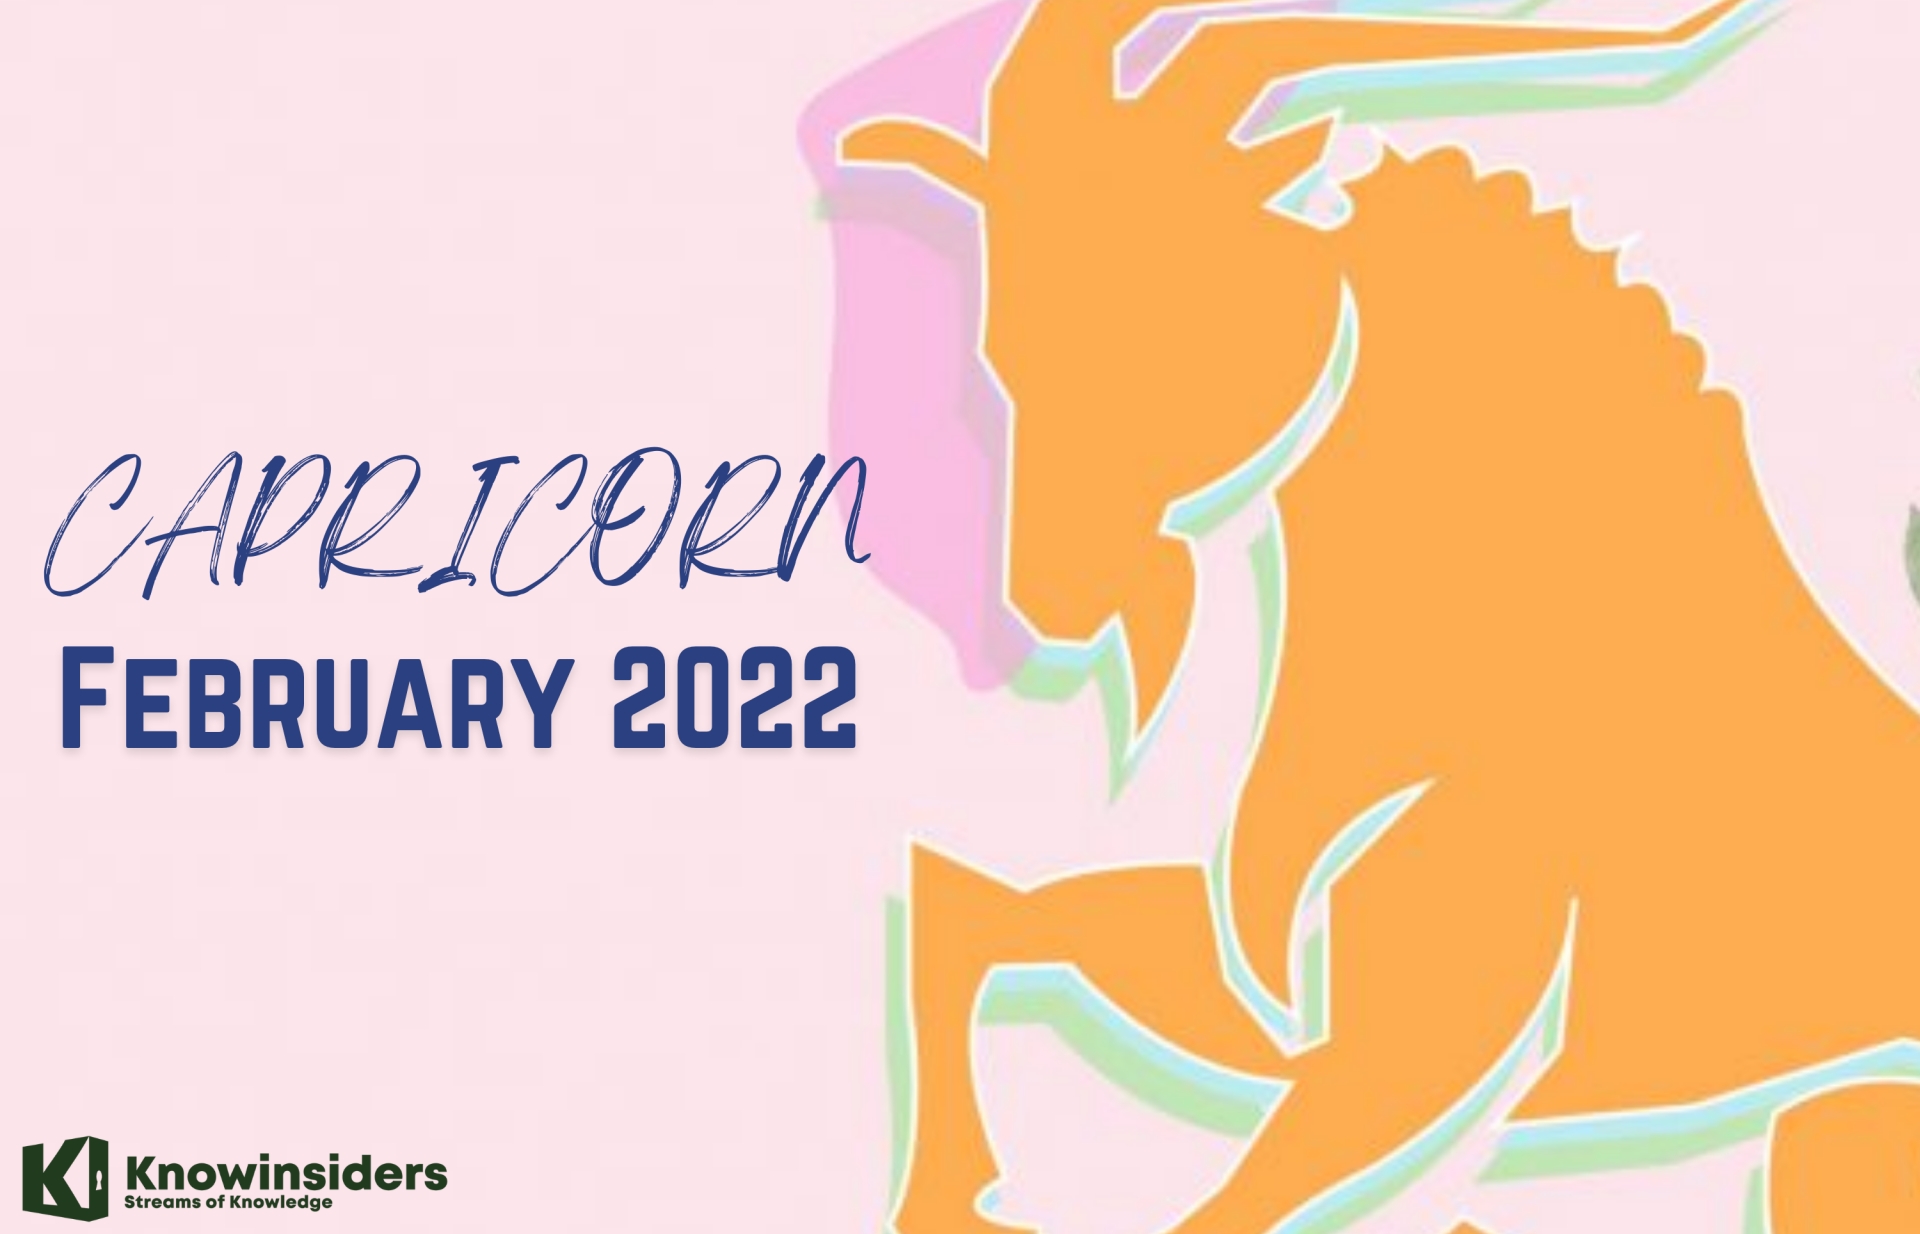 CAPRICORN February 2022 Horoscope: Monthly Prediction for Love, Career, Money and Health